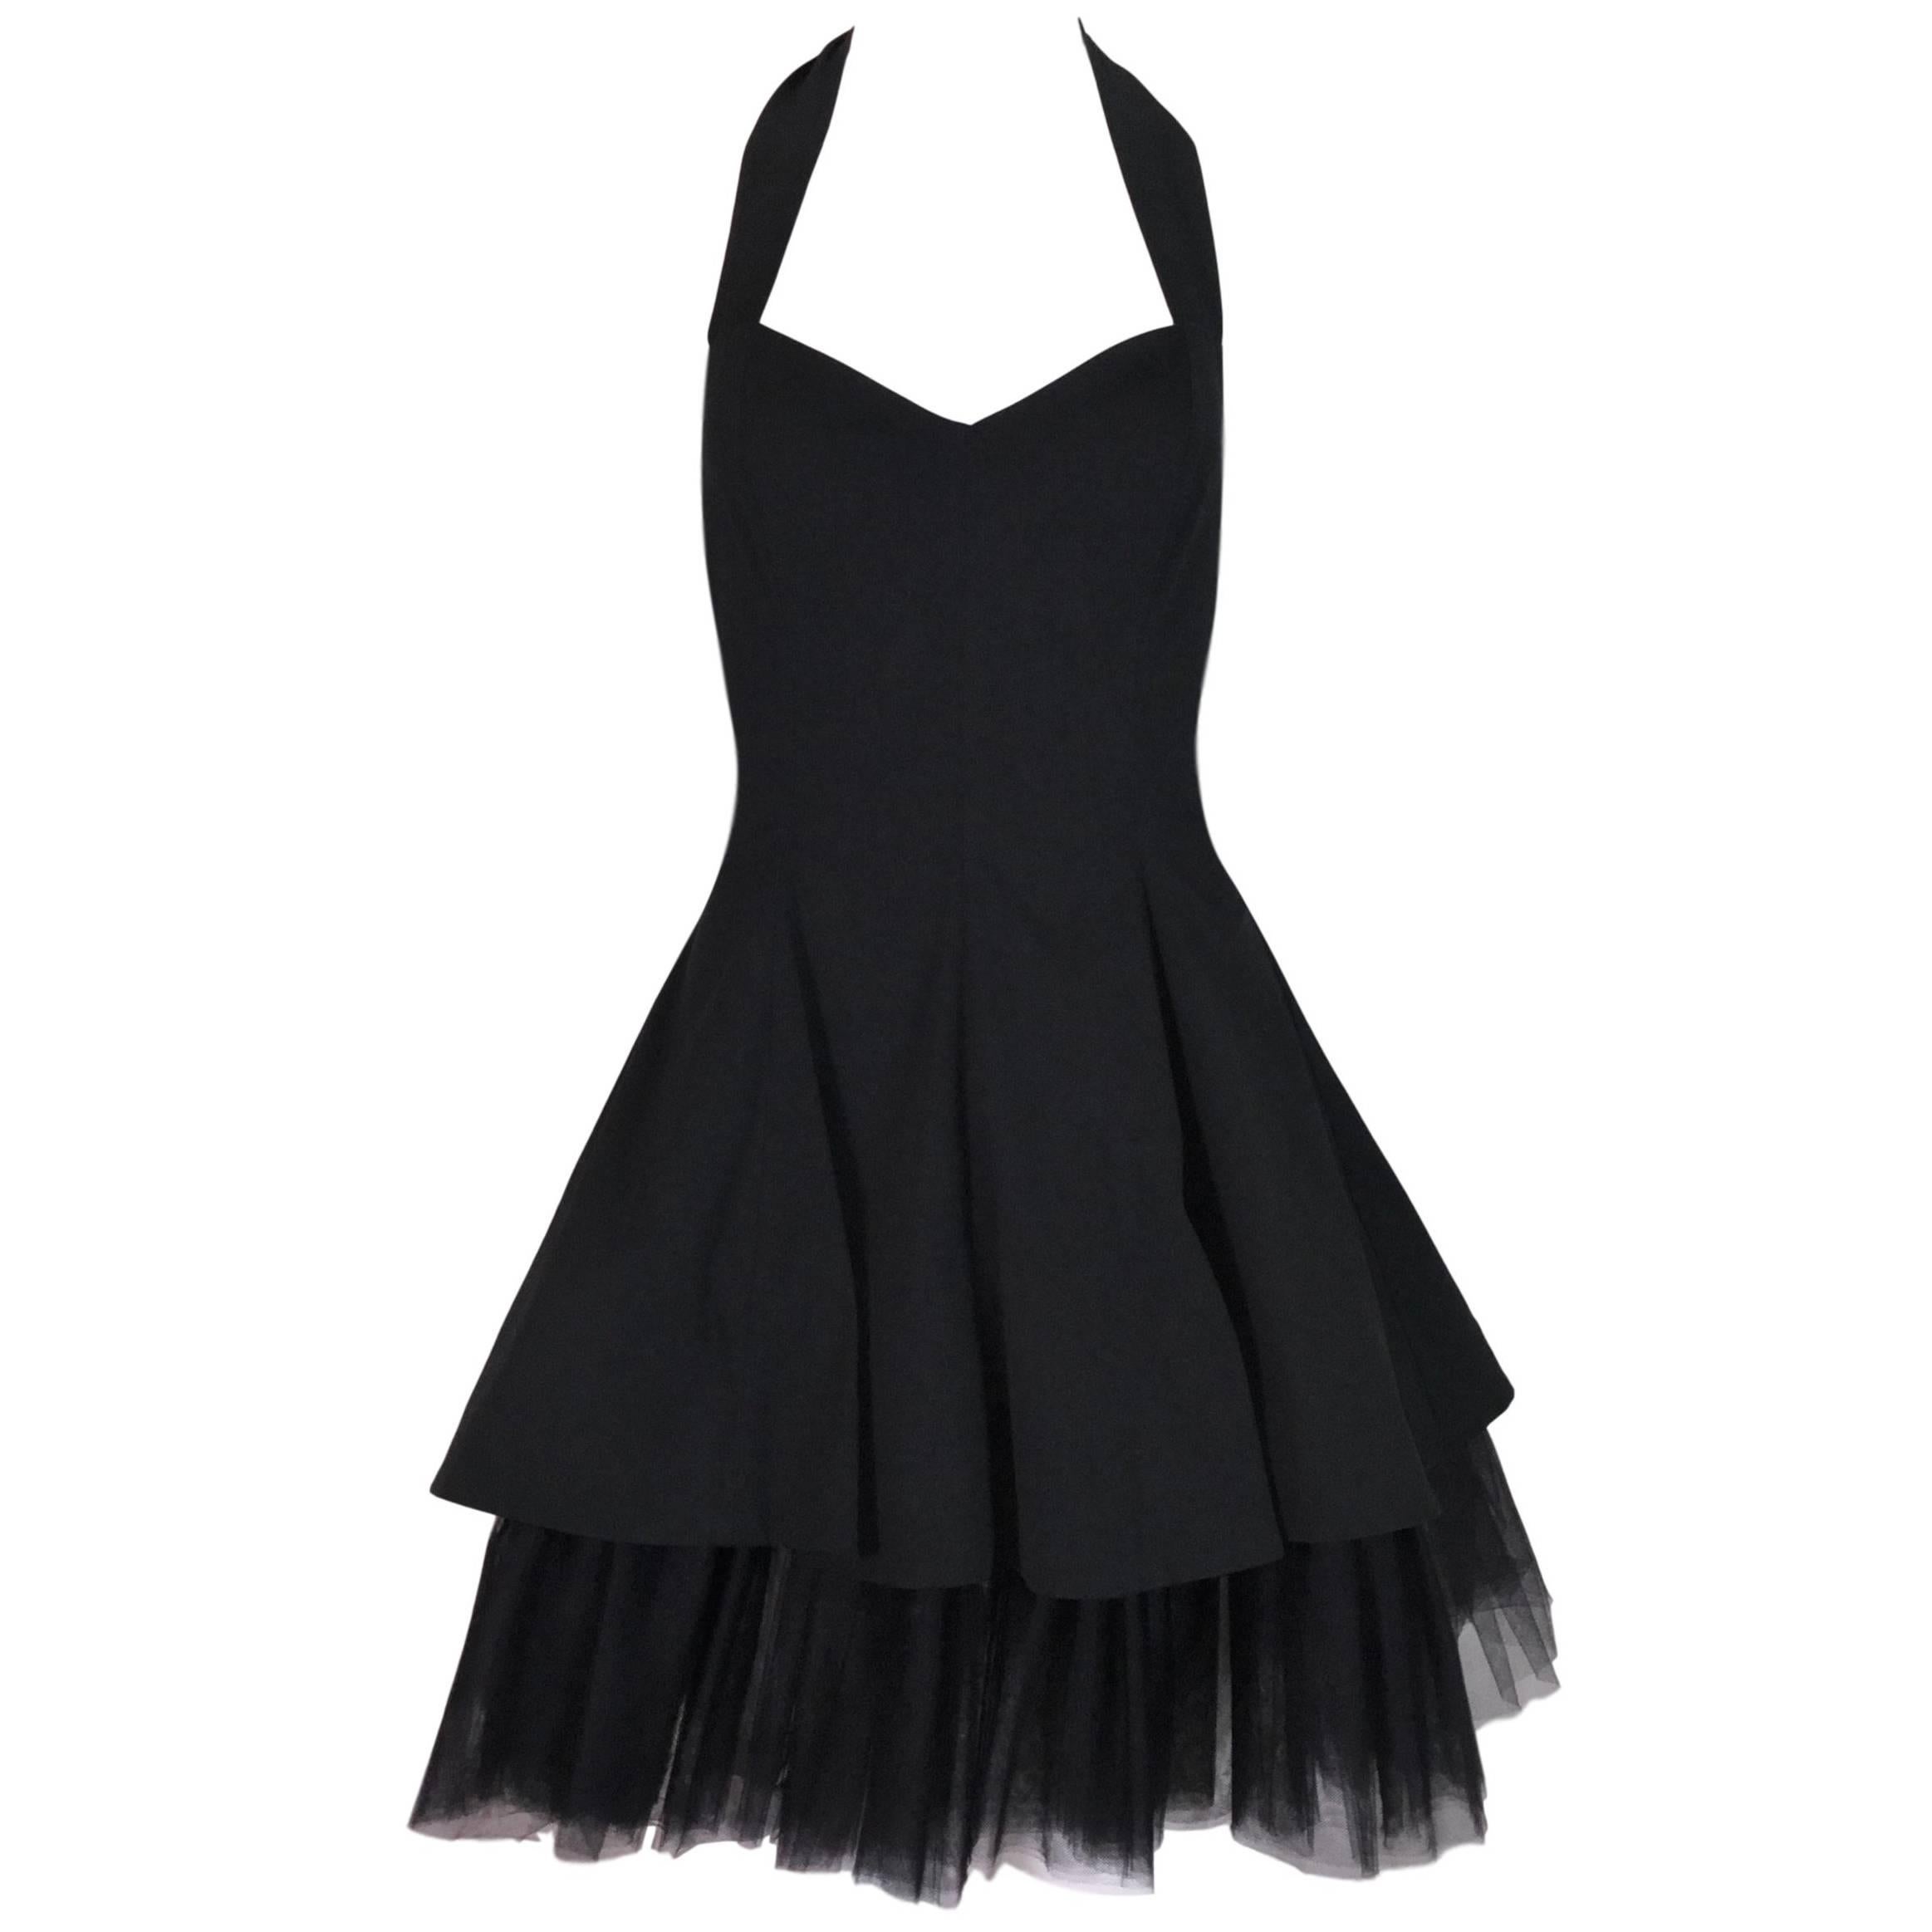 Dolce & Gabbana Documented Halter Ballerina Black Crinoline Mini Dress, S/S 1992